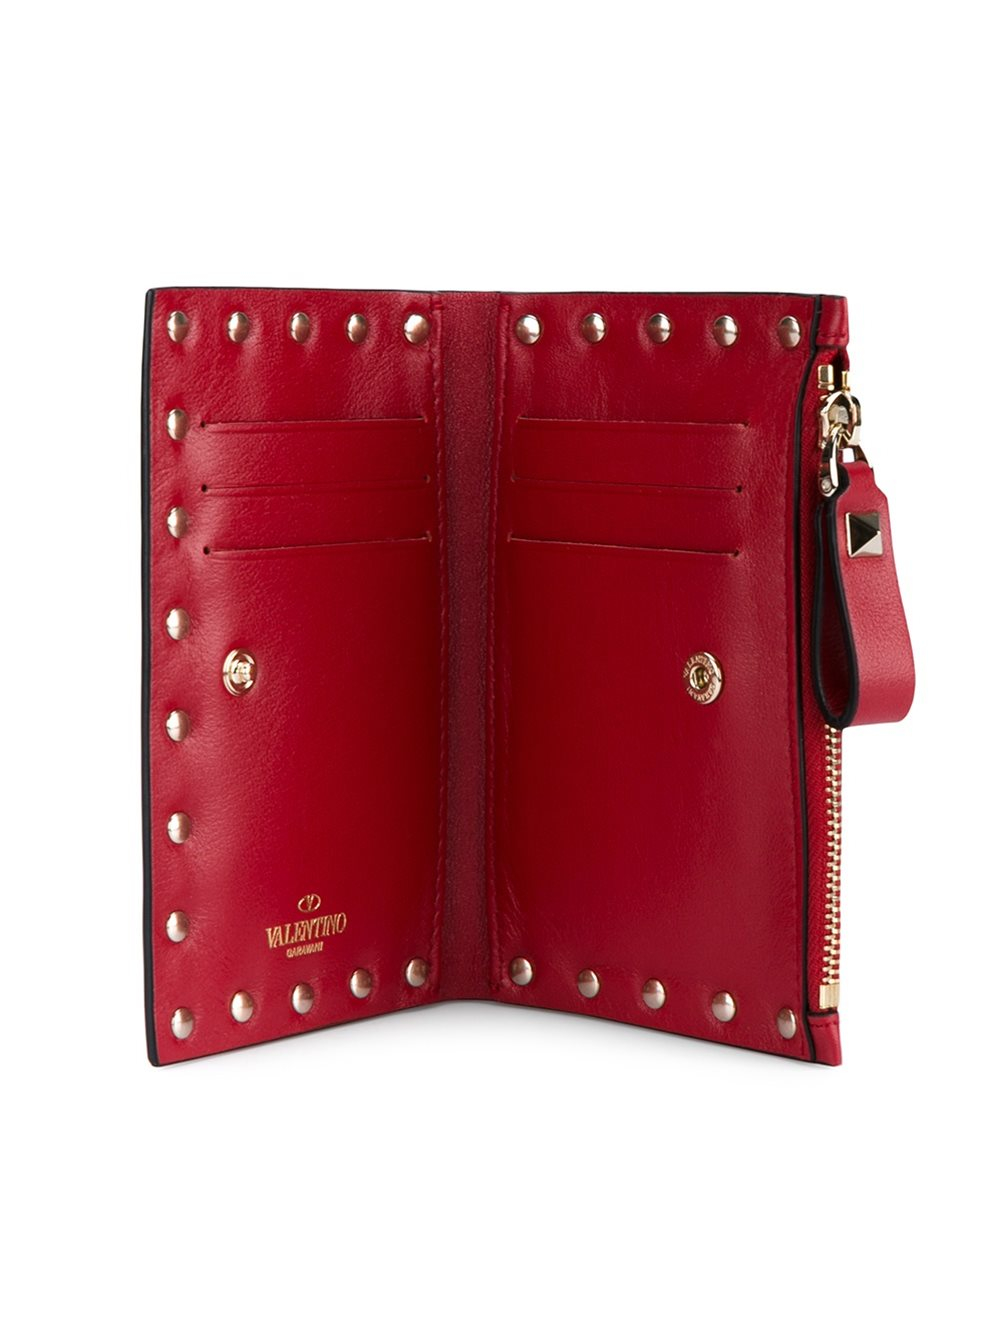 Valentino Garavani Rockstud Wallet in Red | Lyst